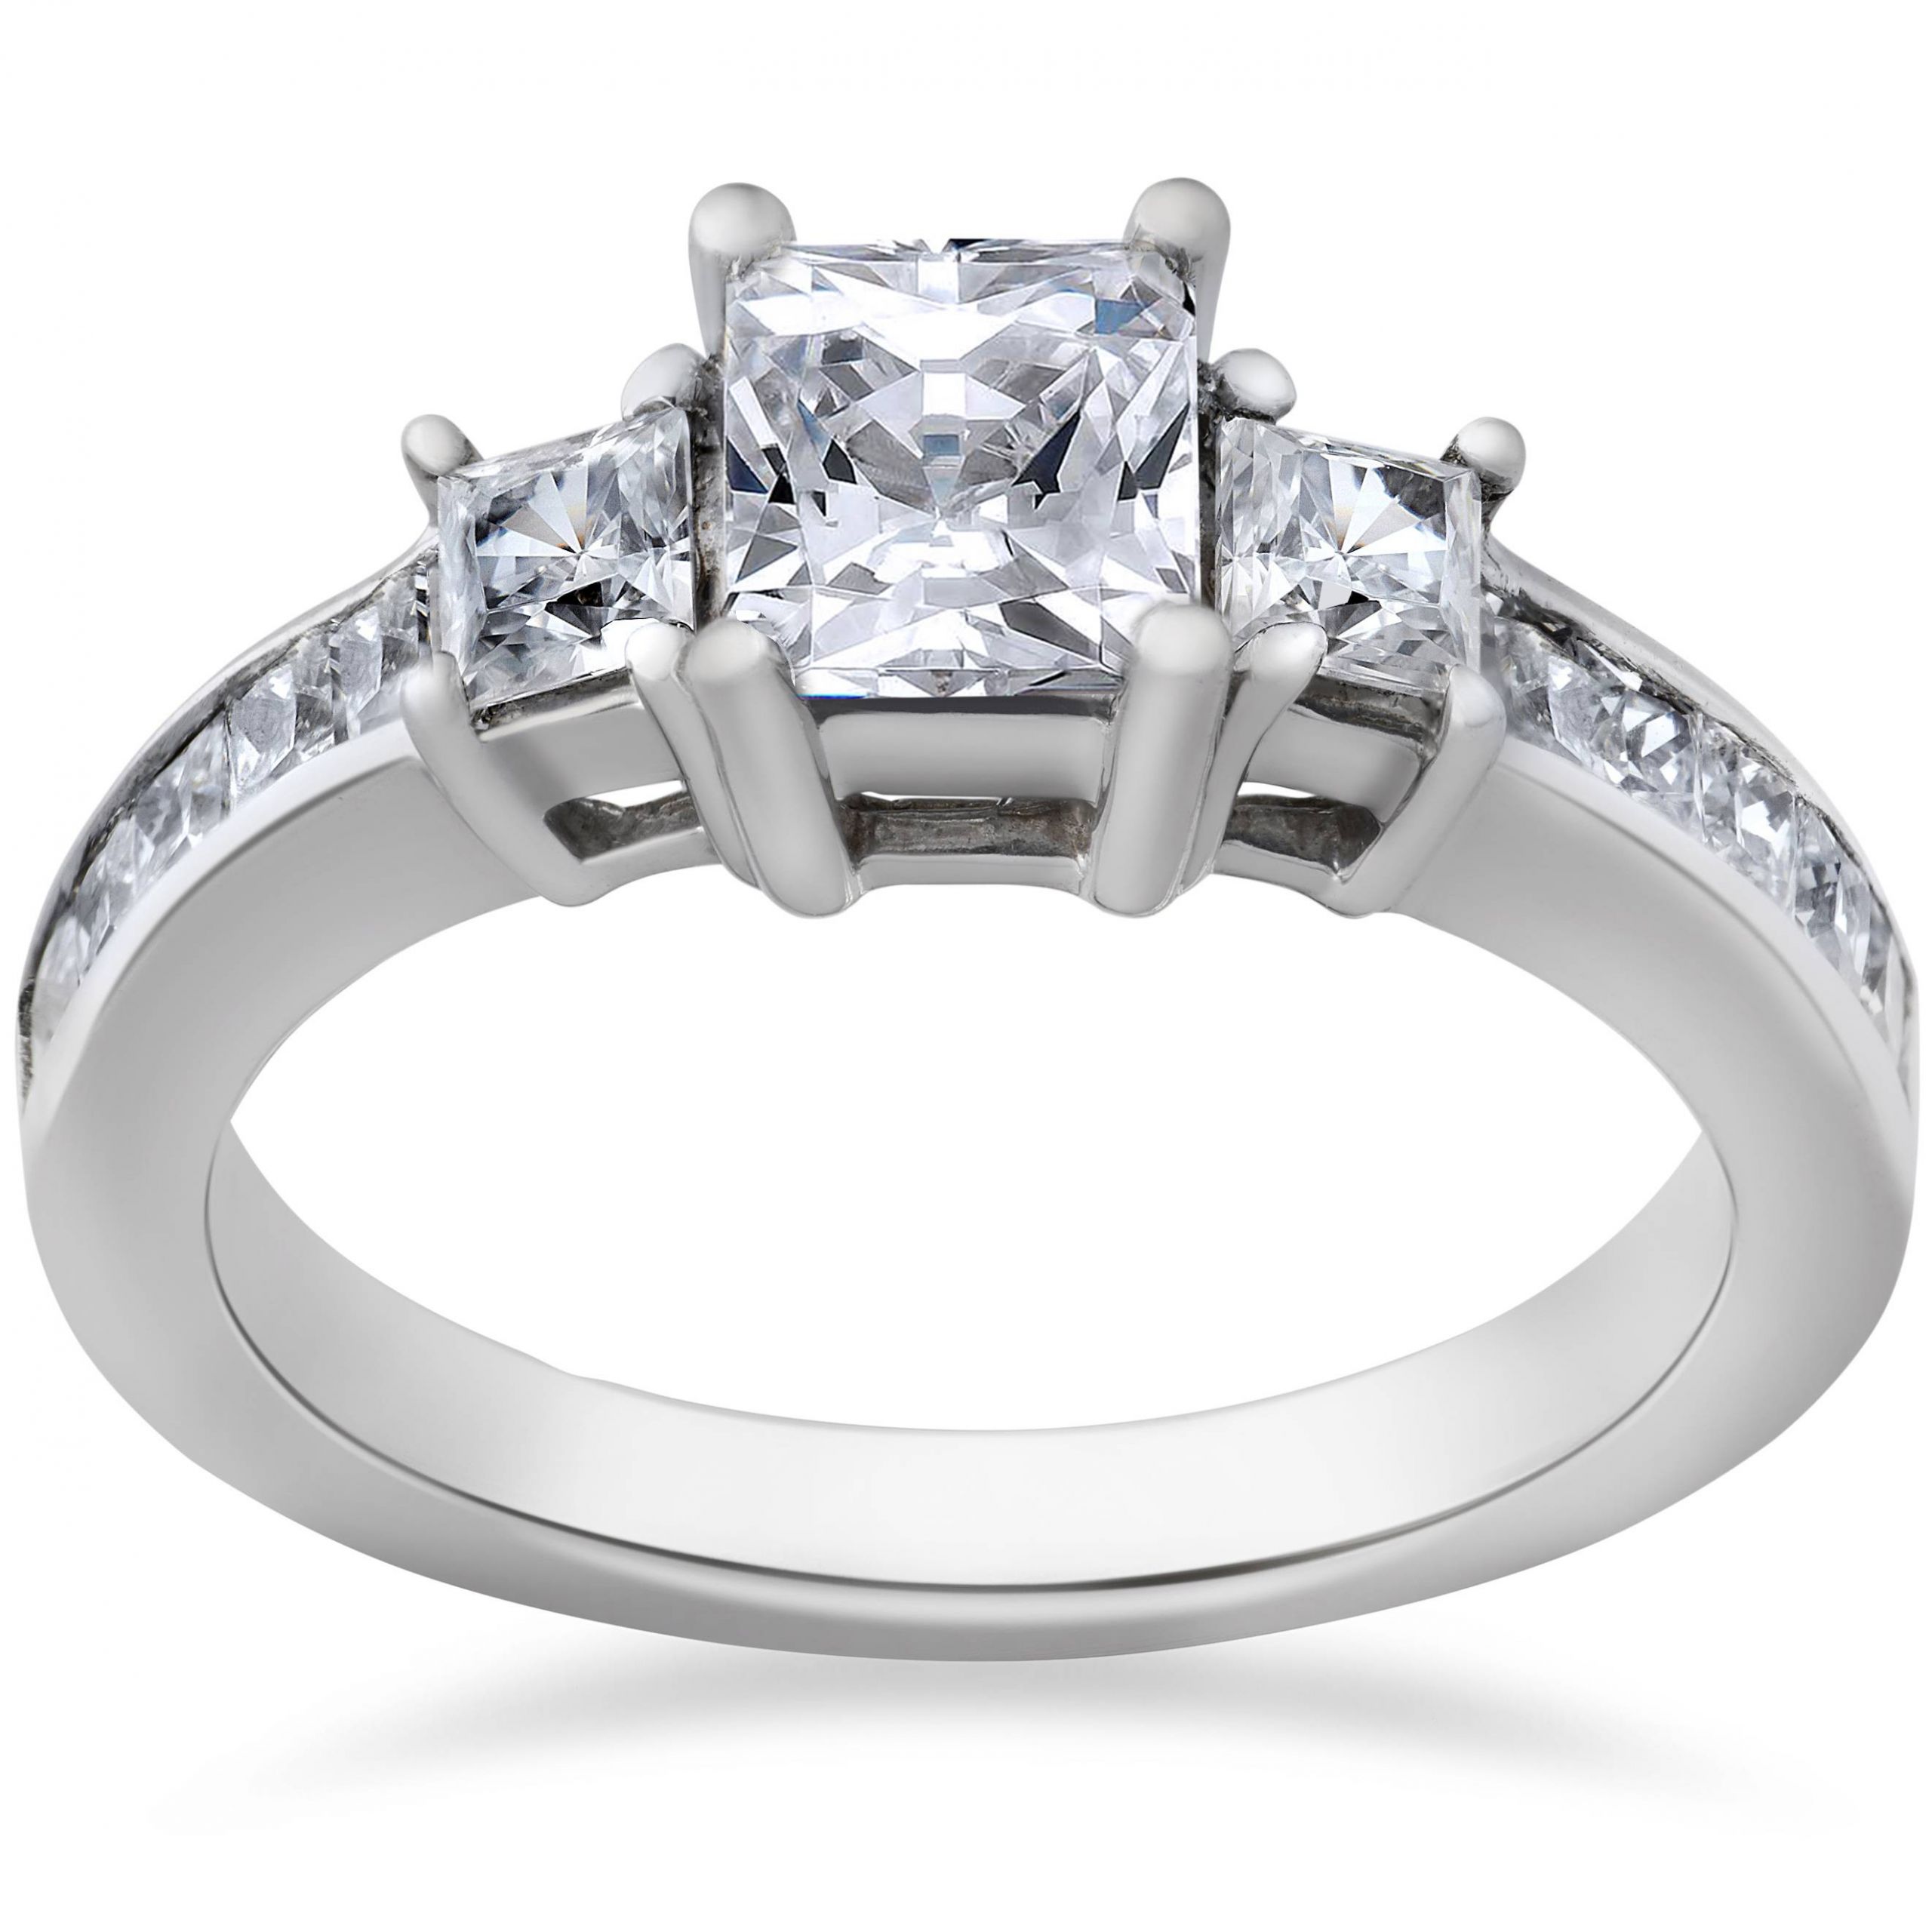 3 Stone Princess Cut Engagement Ring
 Princess Cut Diamond Engagement Ring 3 Stone 1 1 2ct 14k